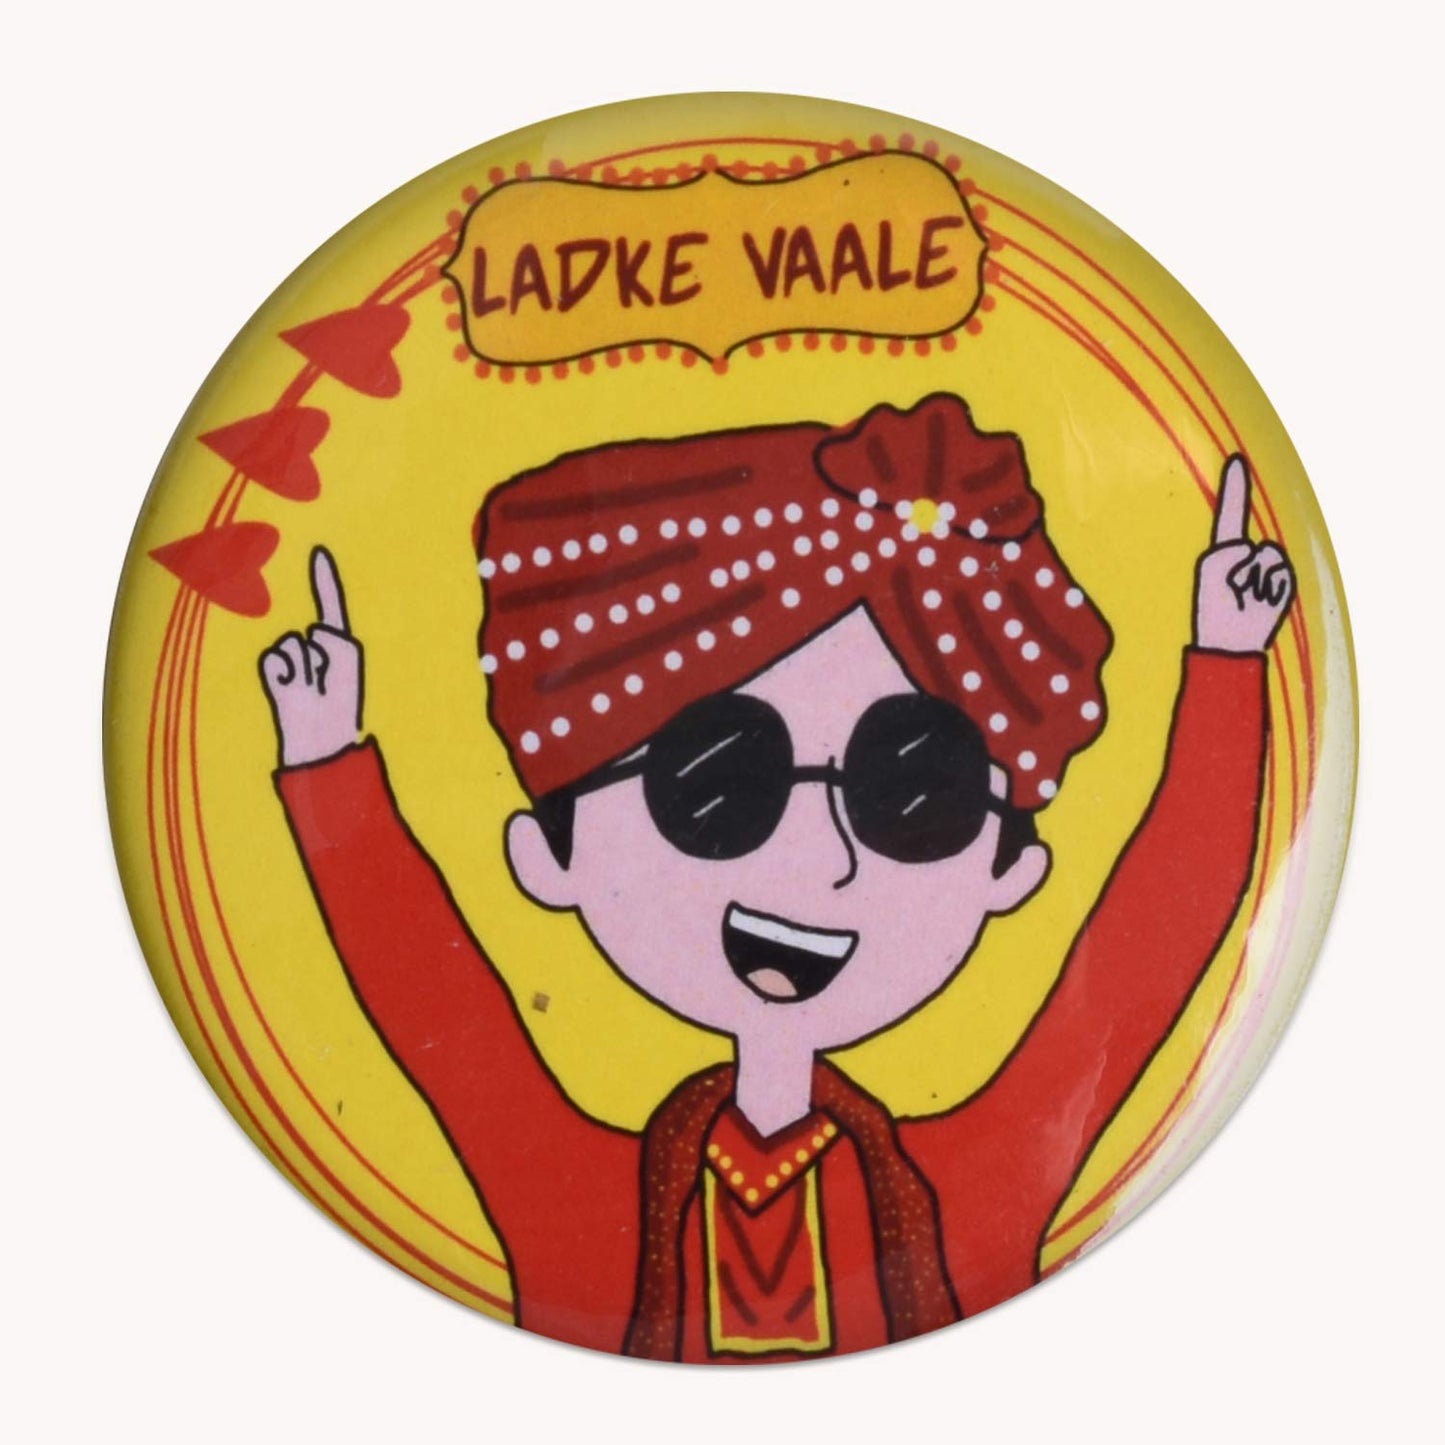 Ladke wale 63 MM Badges (Pack of 15)